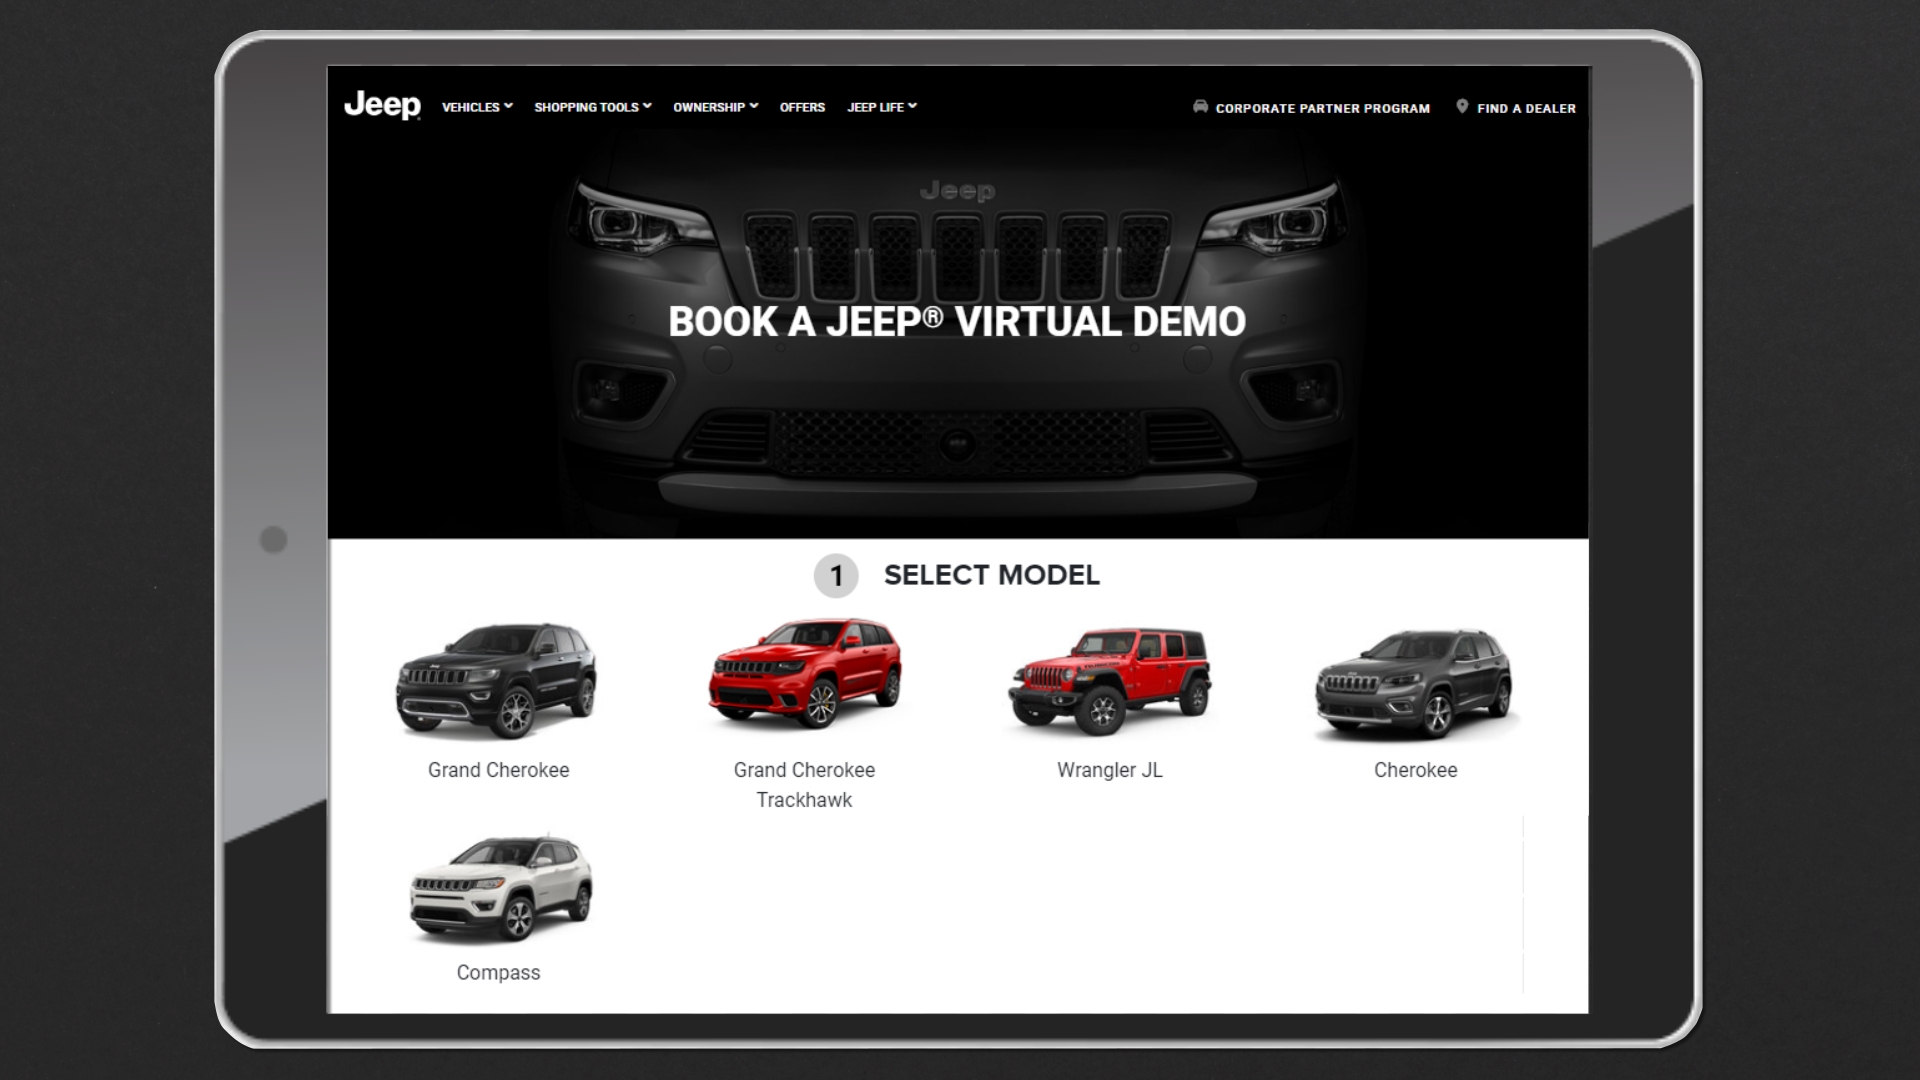 Jeep Australia launches virtual vehicle demos